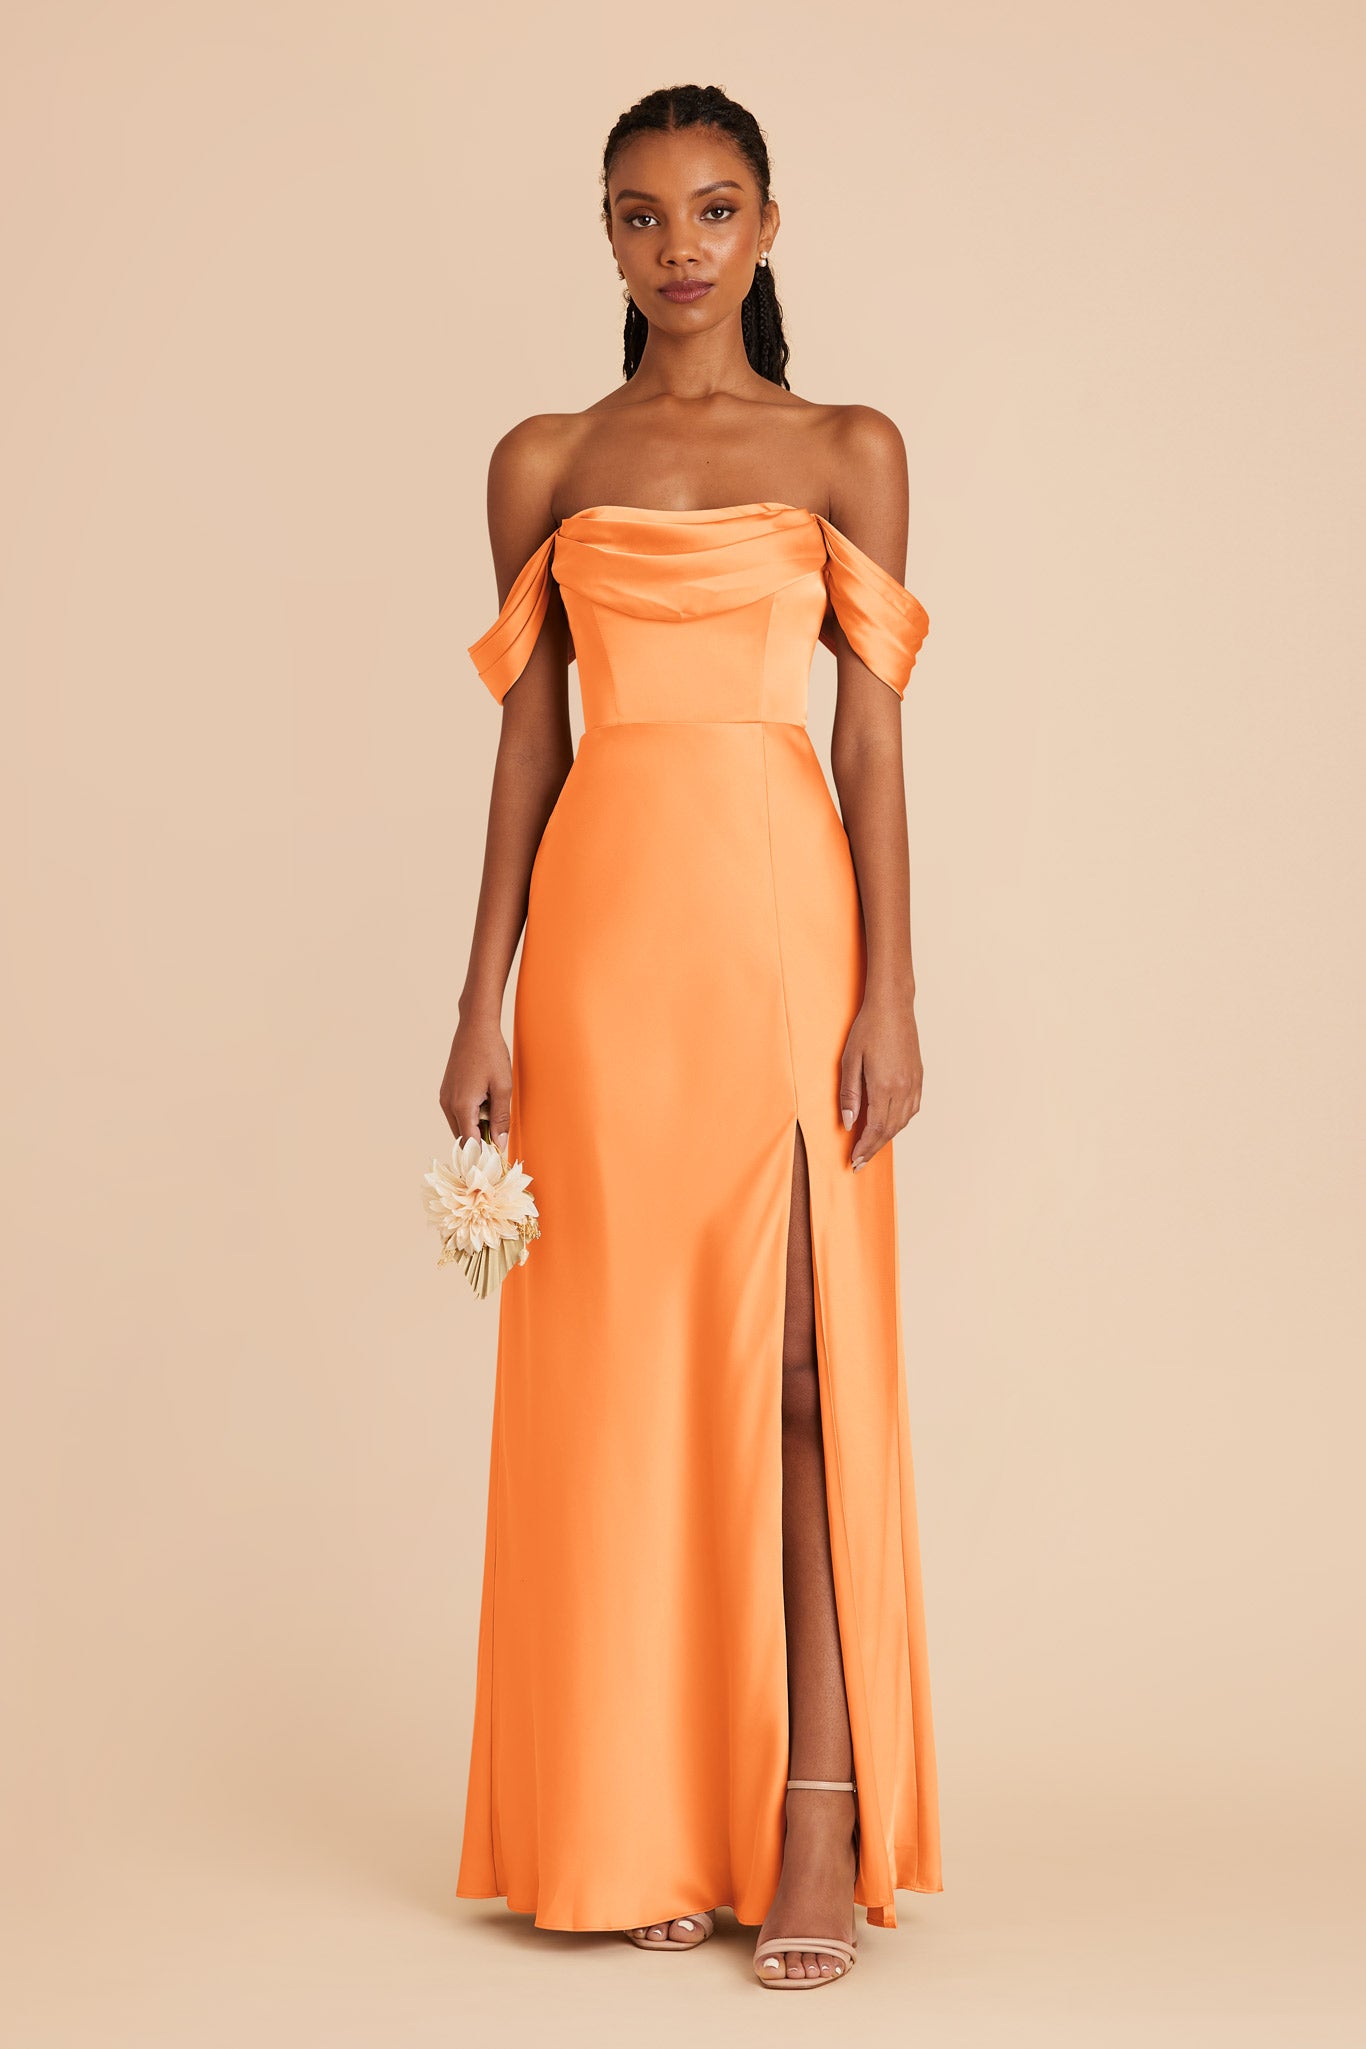 Apricot Mia Matte Satin Dress by Birdy Grey